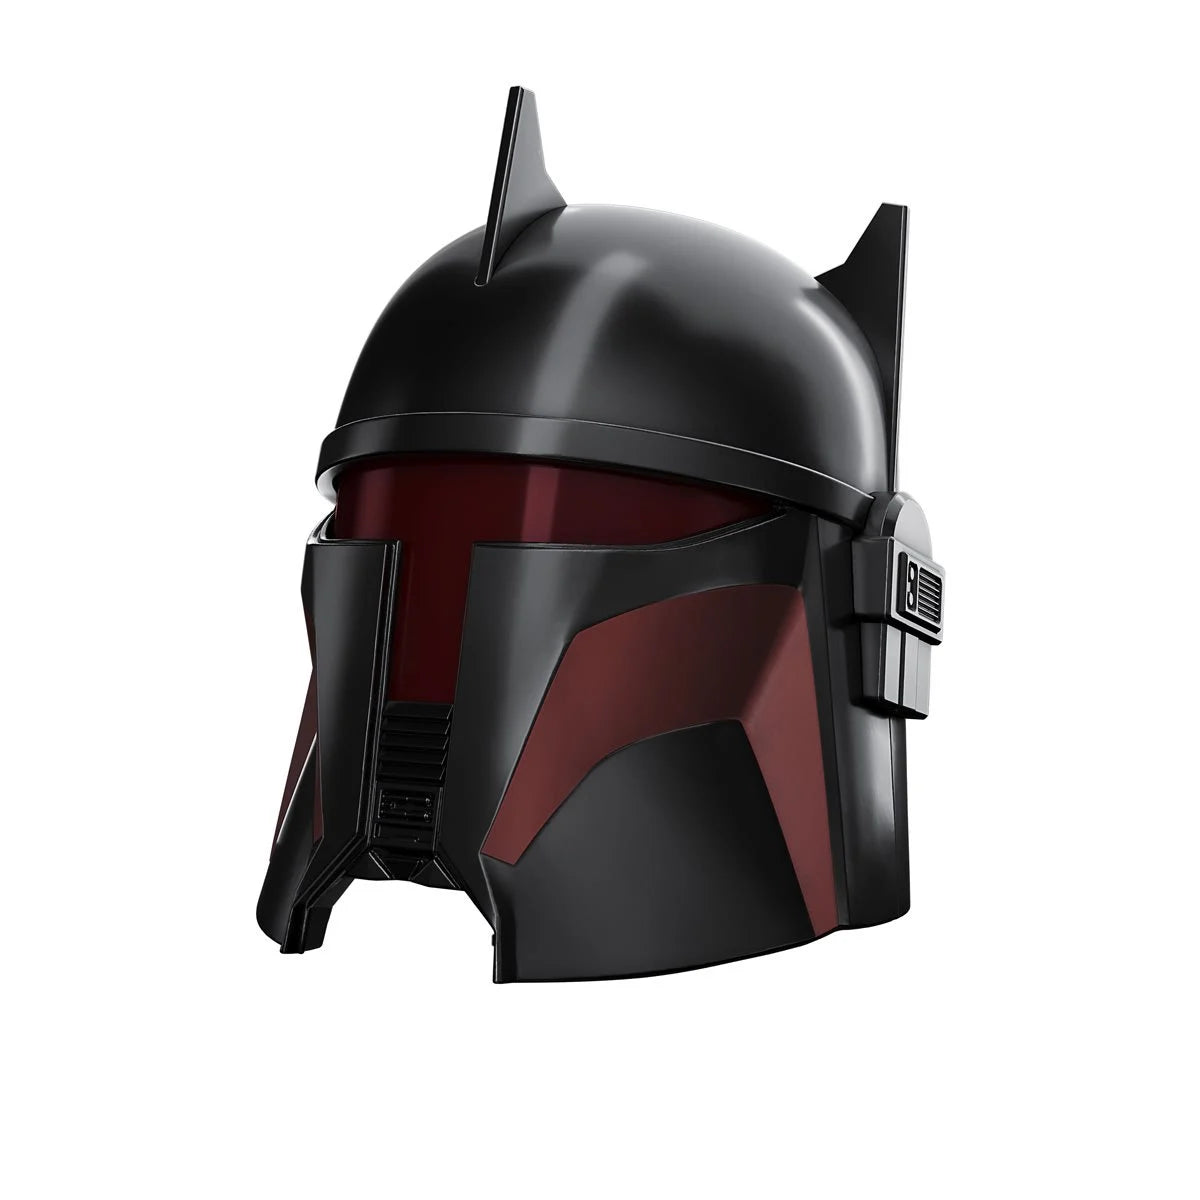 [PRE-ORDER] Star Wars The Black Series Moff Gideon Premium Electronic Helmet